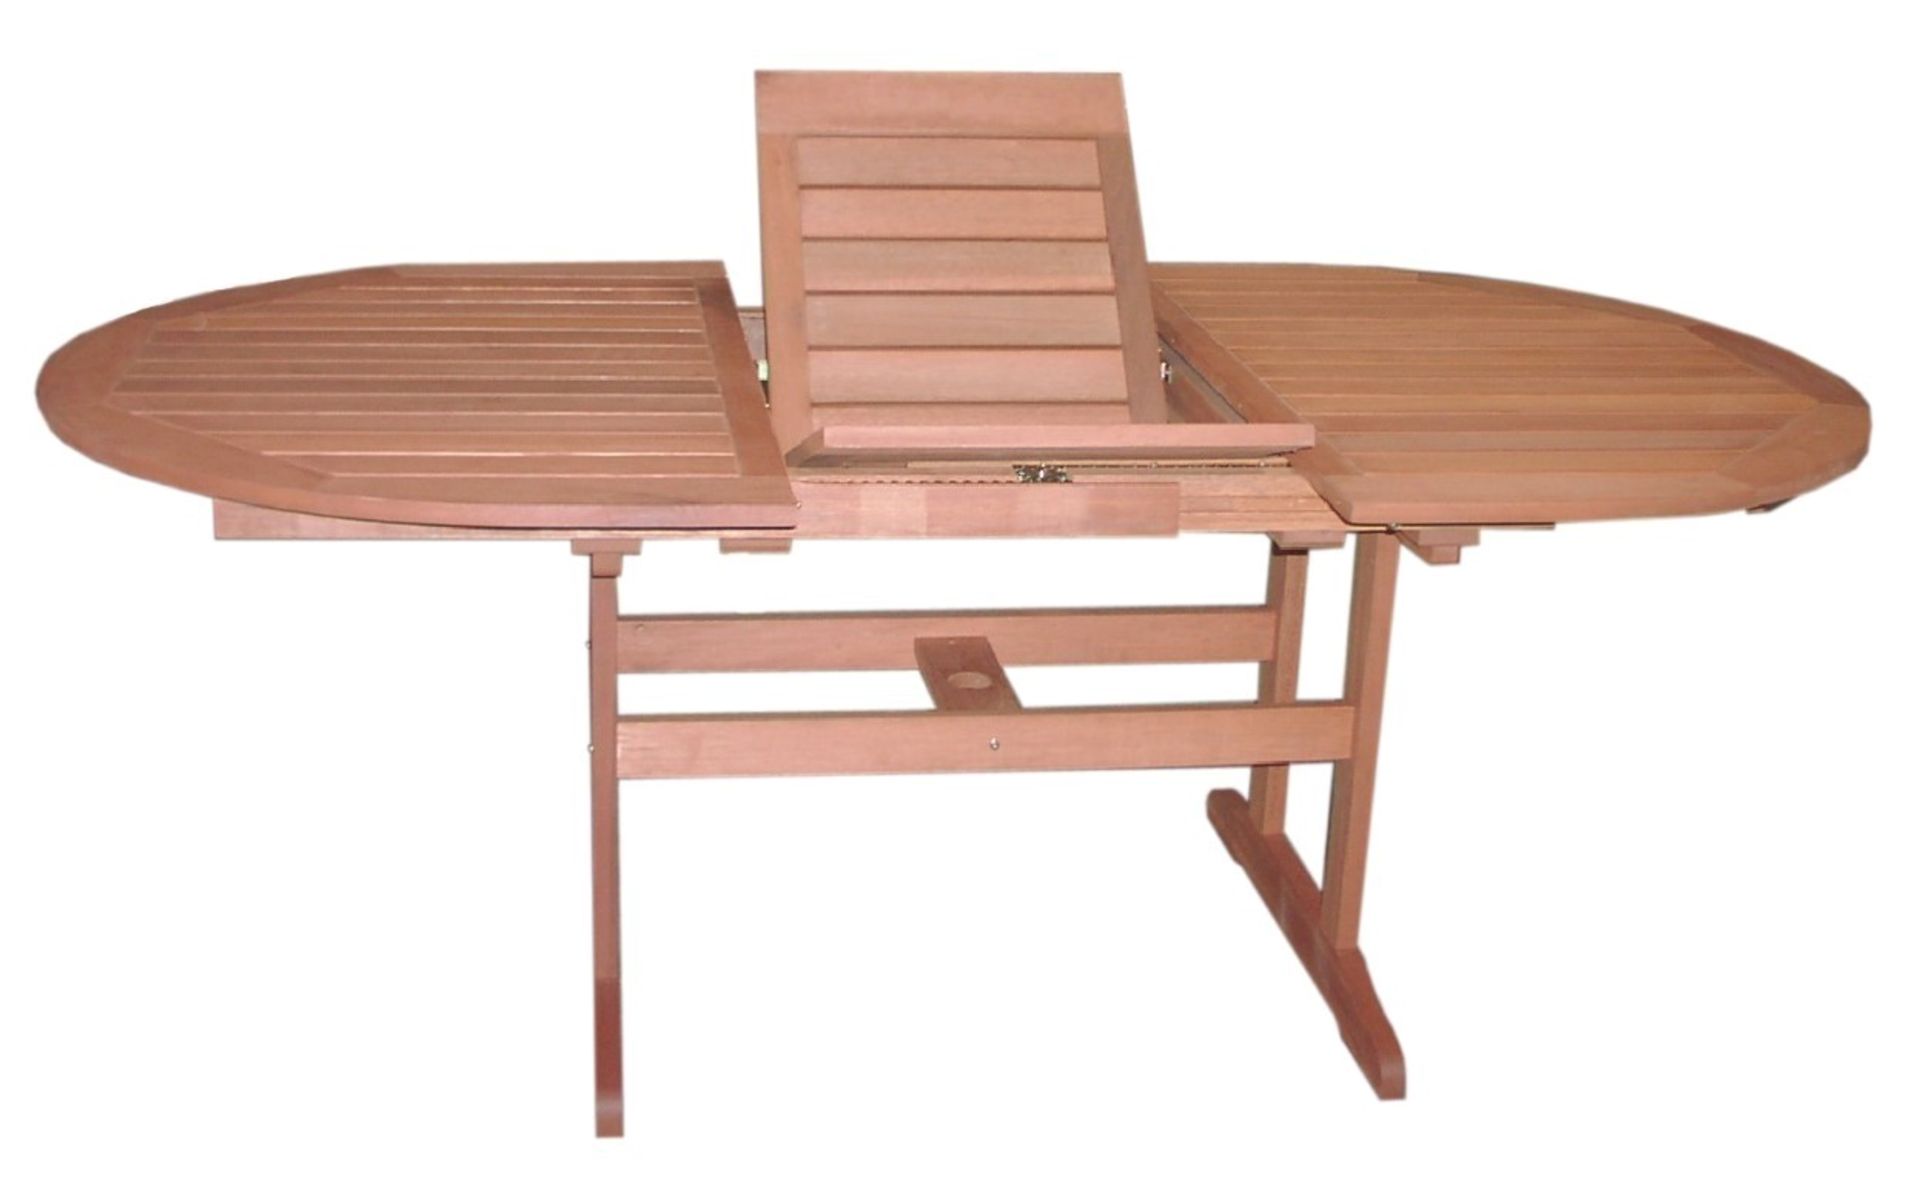 1 x 5-Piece "Macau Nassau" Garden Furniture Set - Includes Bench, Extending Table & 3 x Arm Chairs - - Image 6 of 9